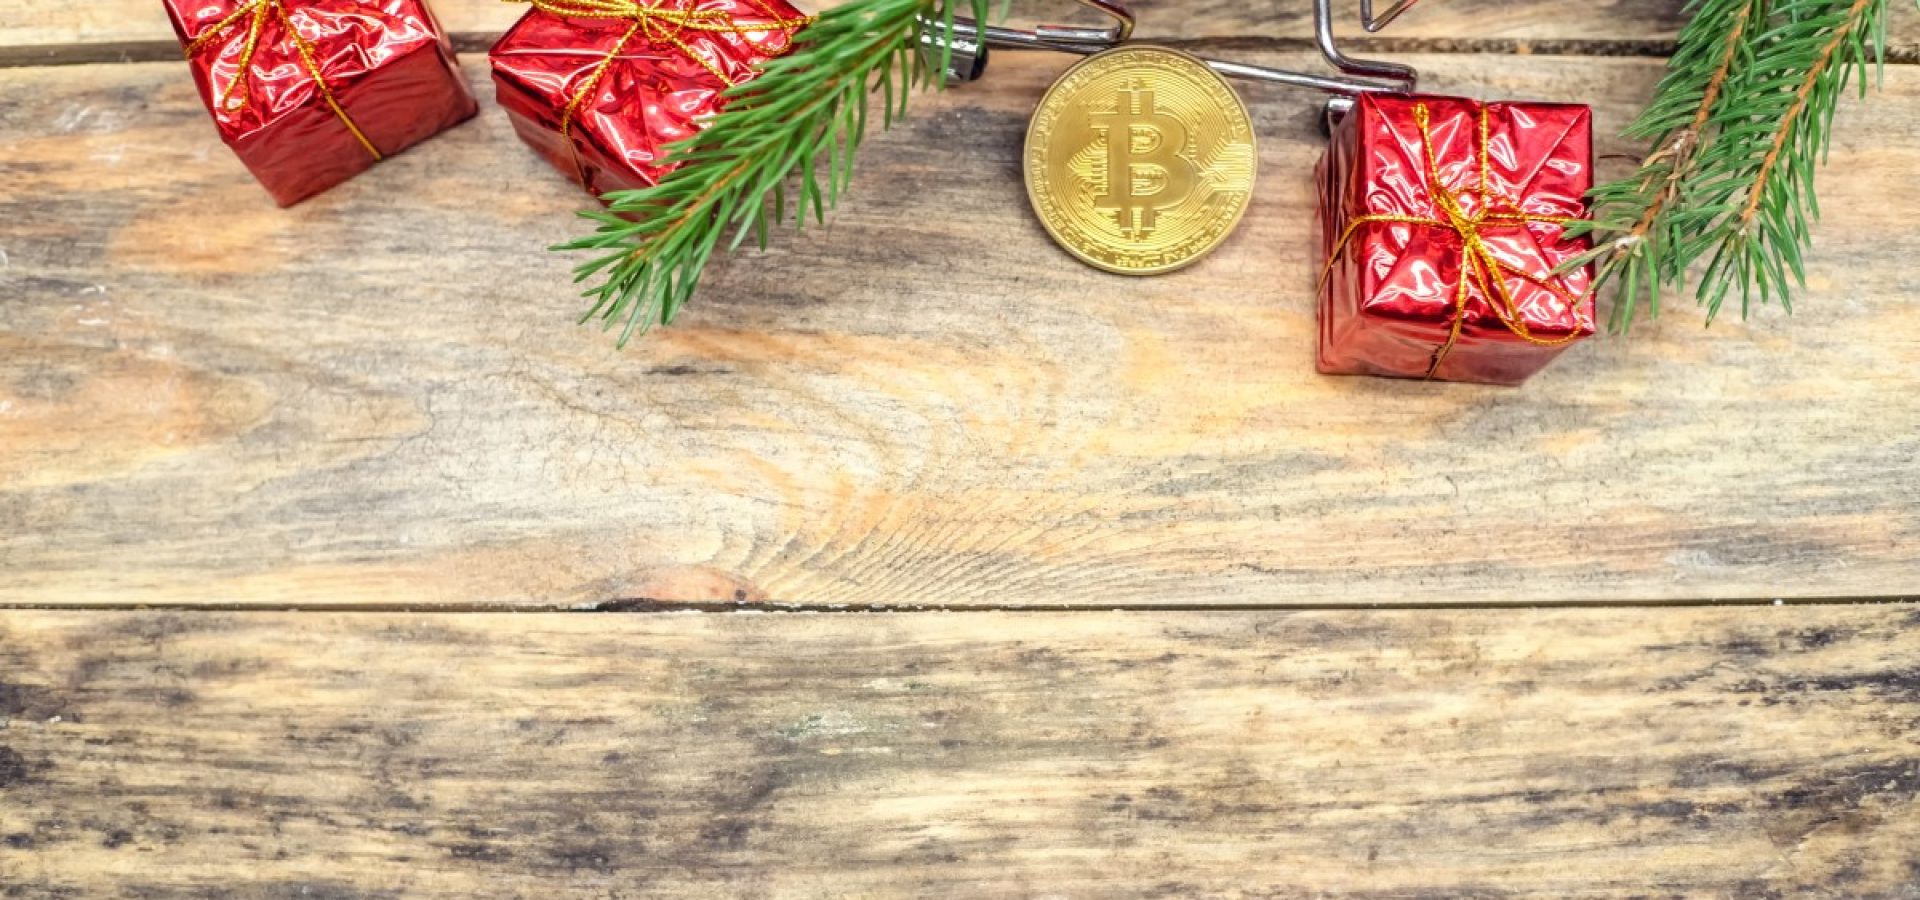 Bitcoin and holidays